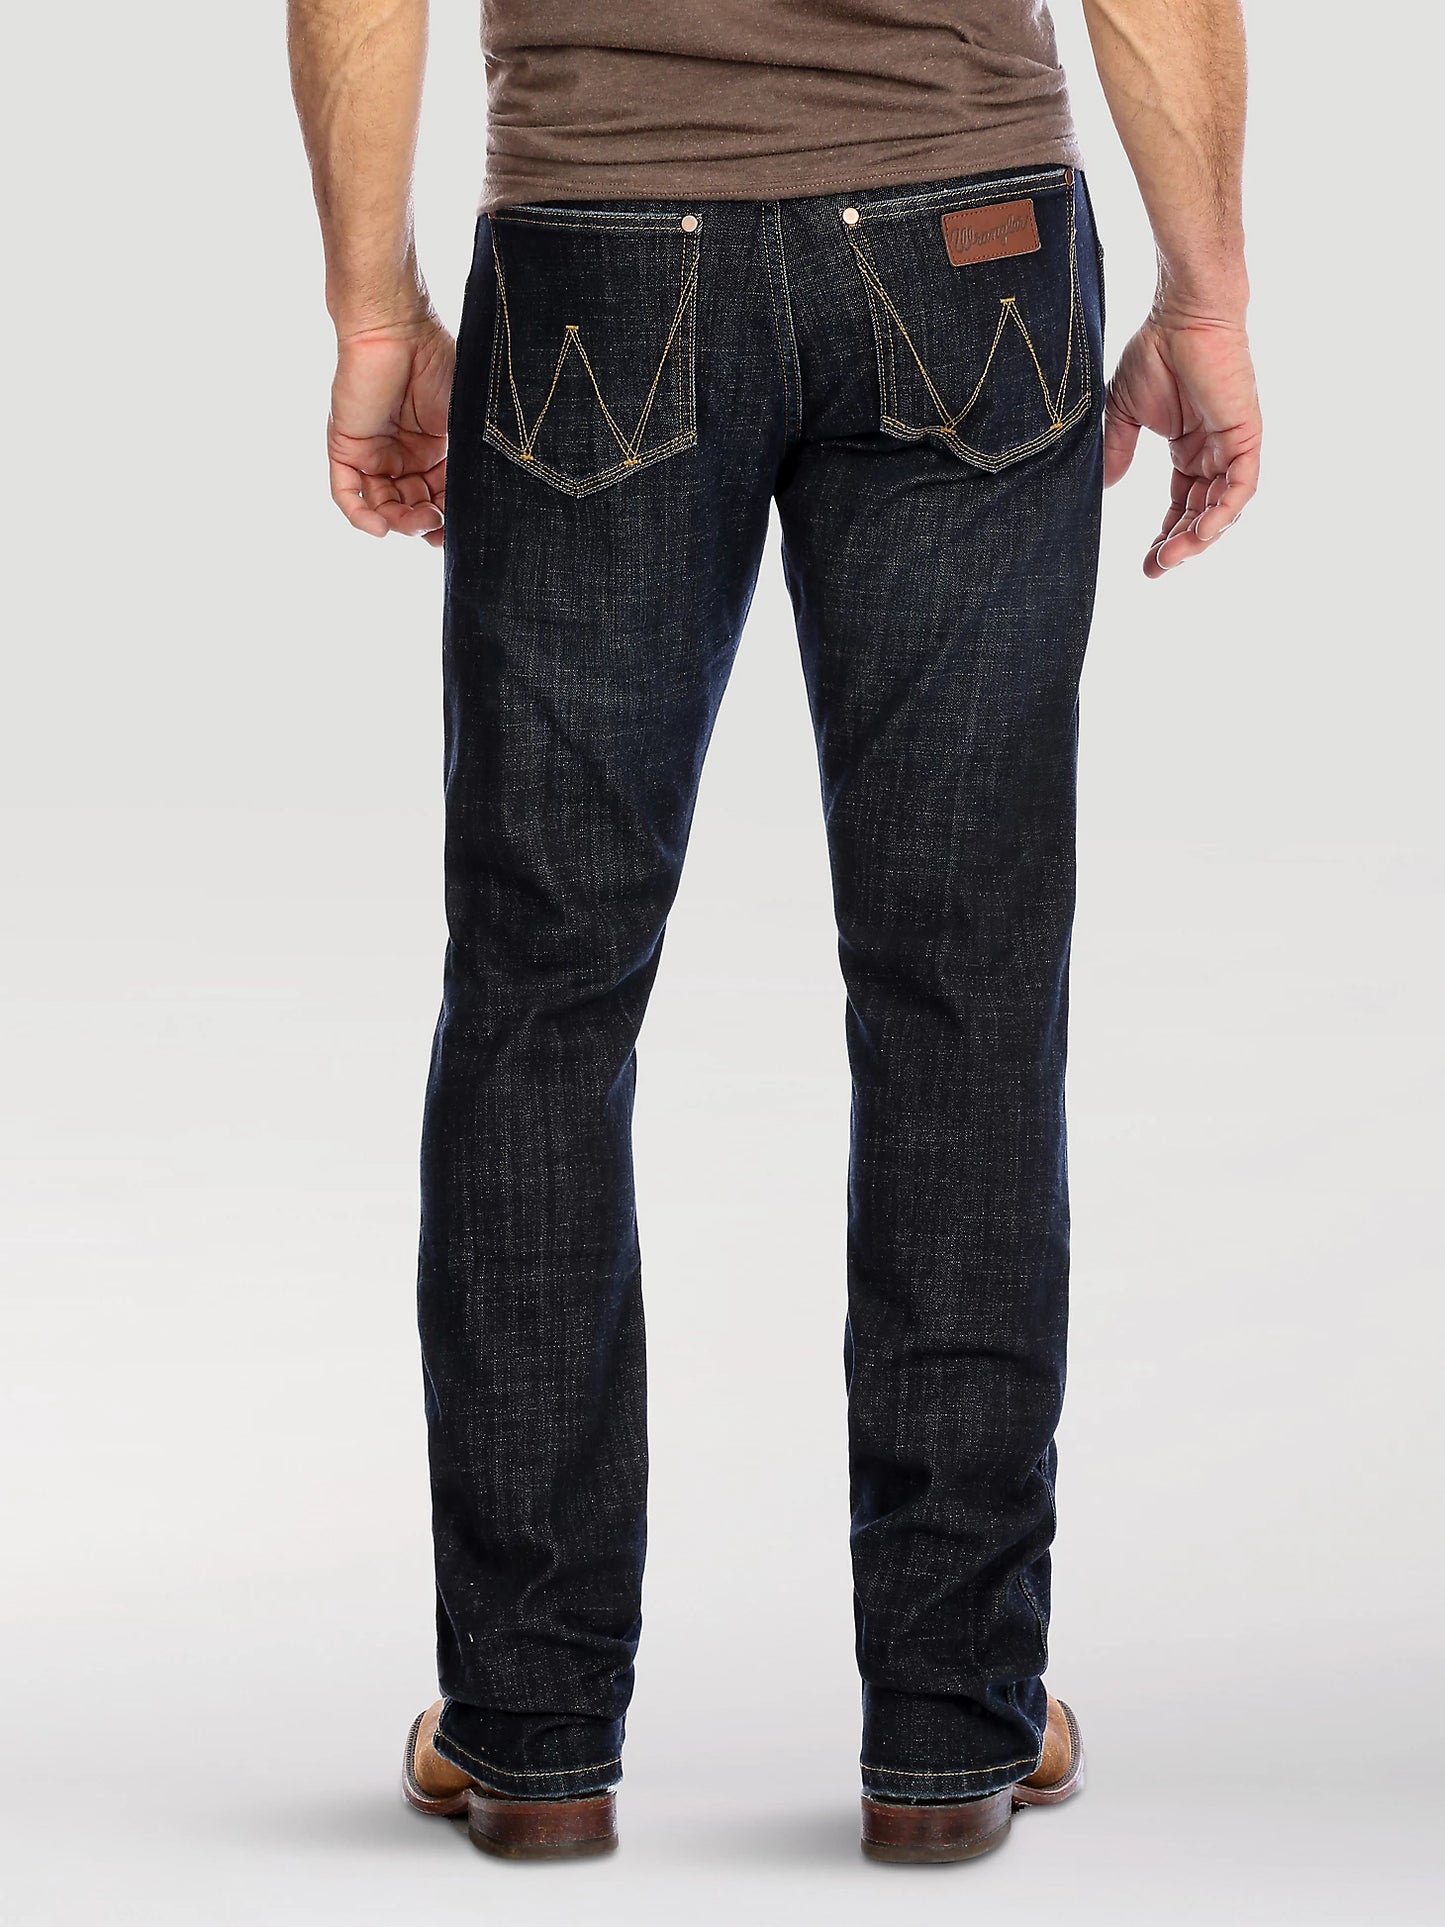 Wrangler USA Mens Slim Fit Boot Cut Jean in Dax - 77MWZDX32